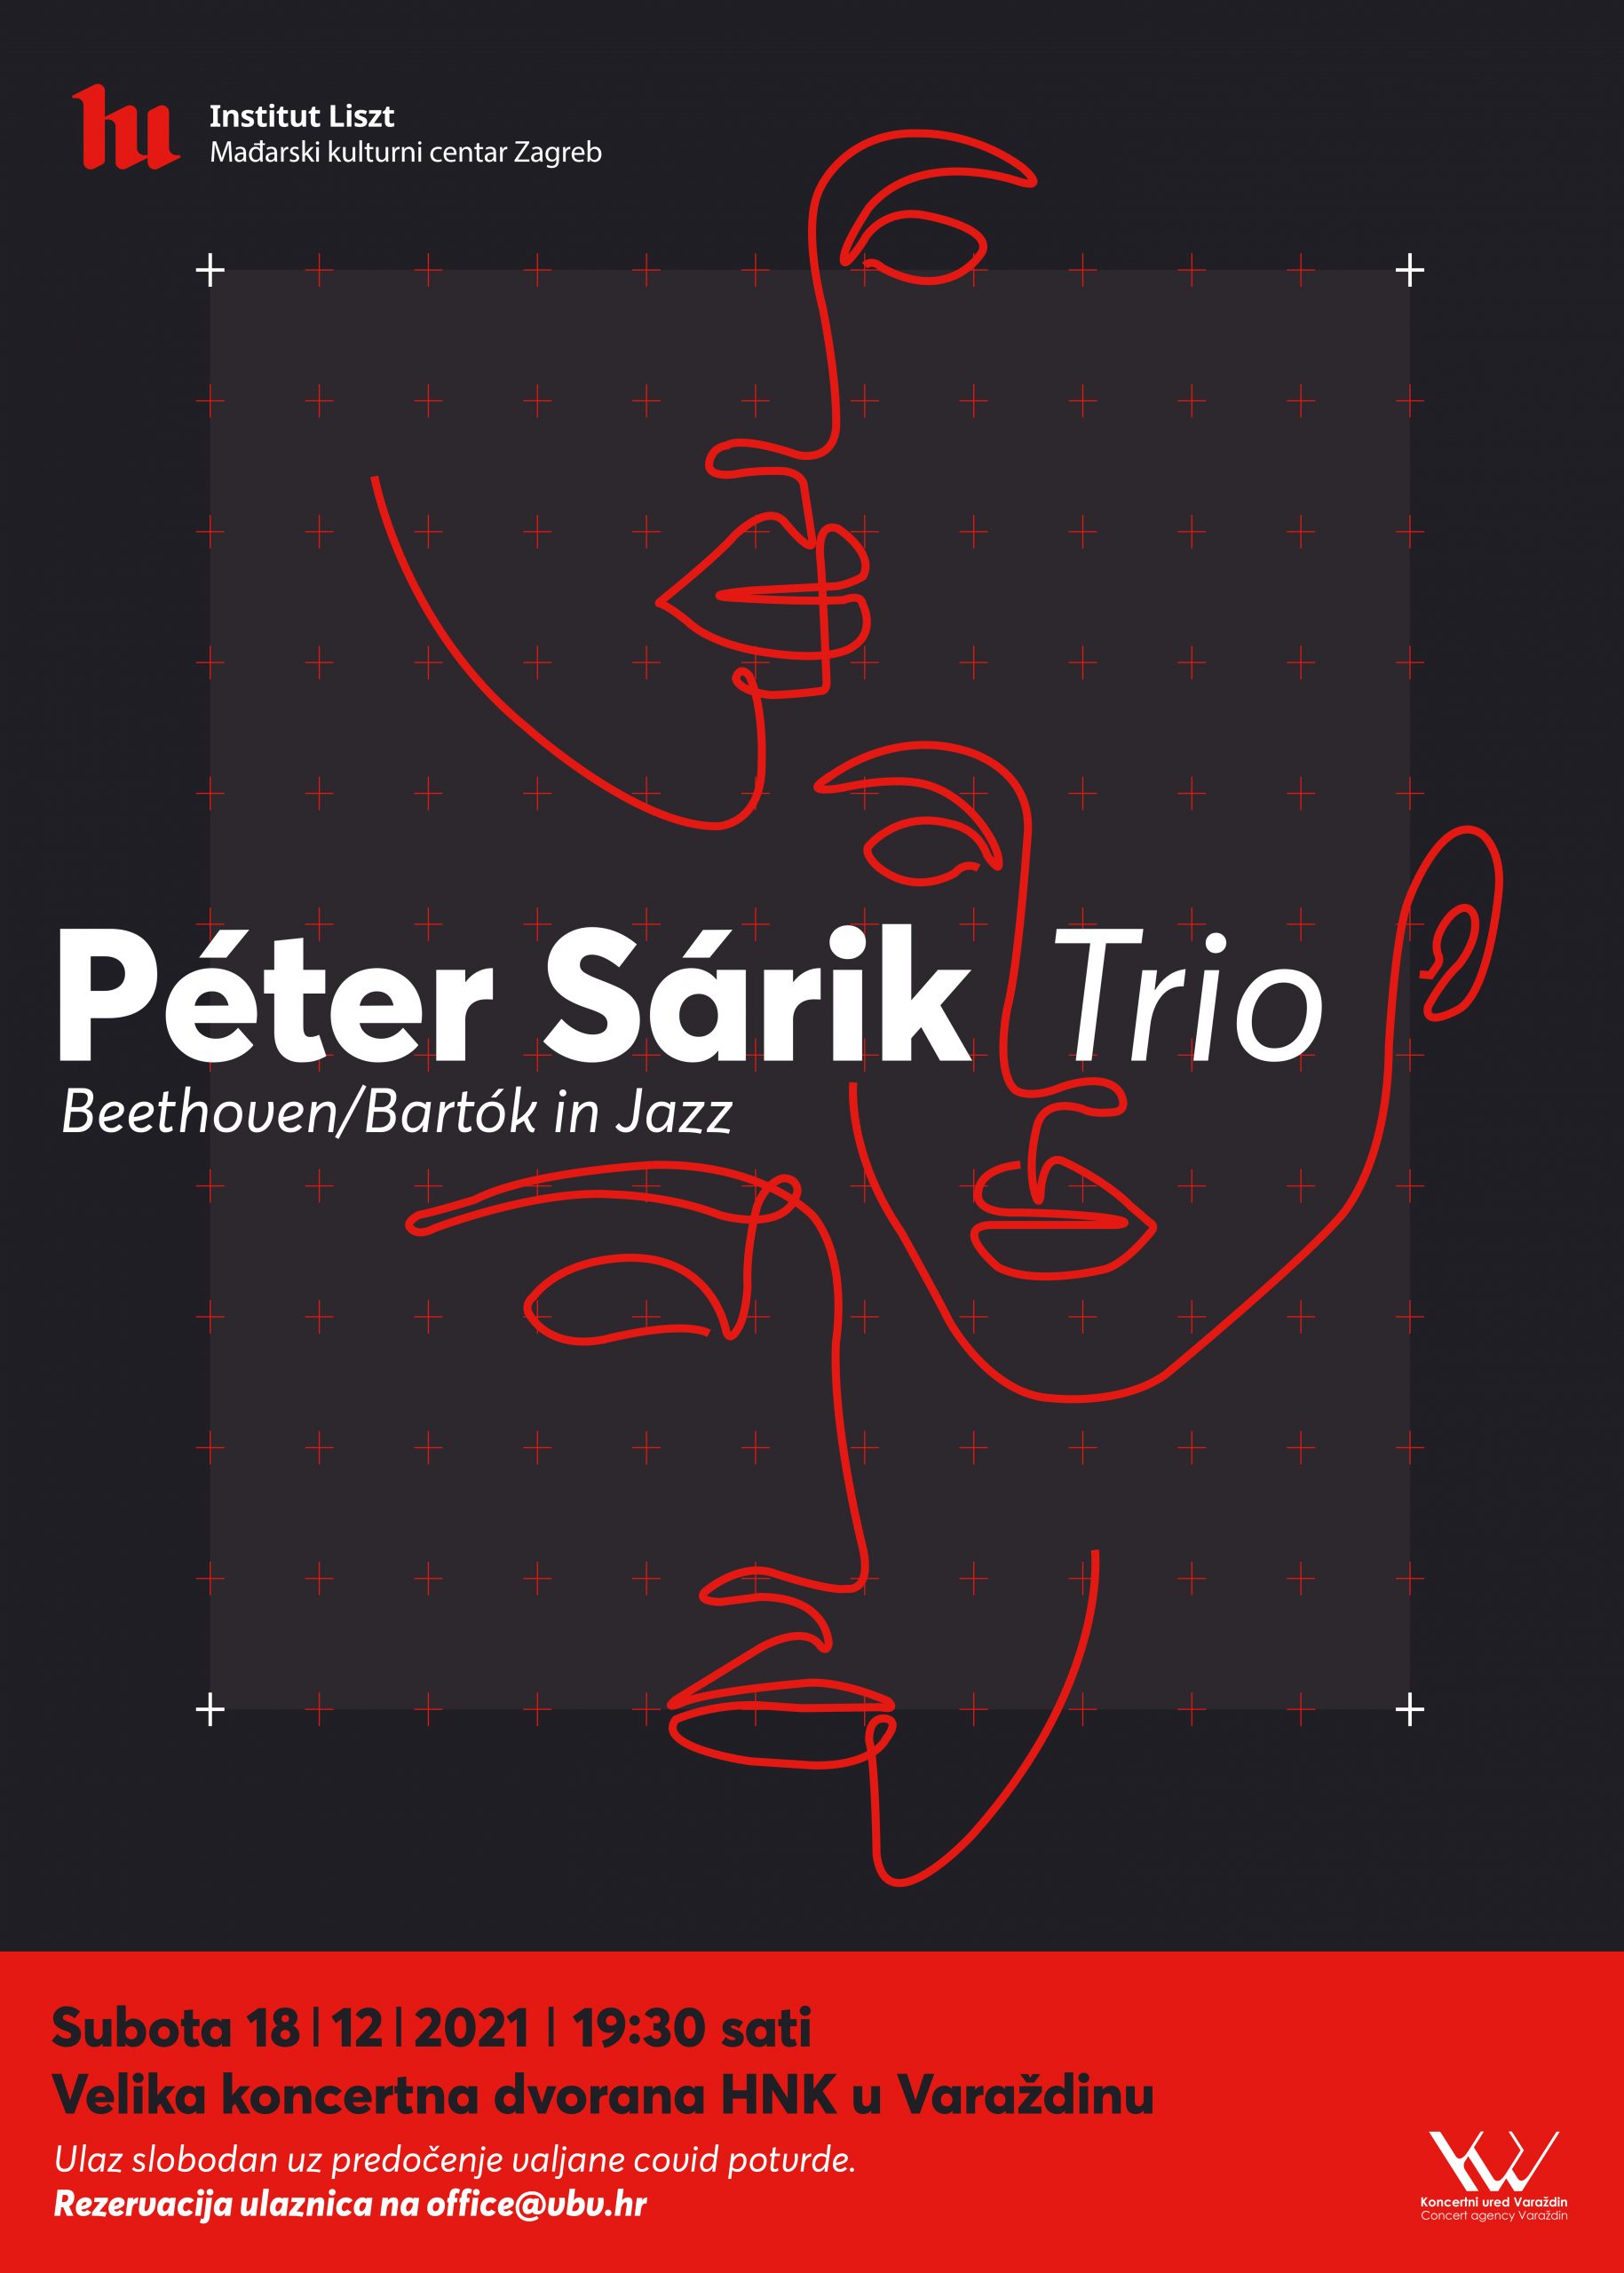 Peter Sarik Triothumbnail - 